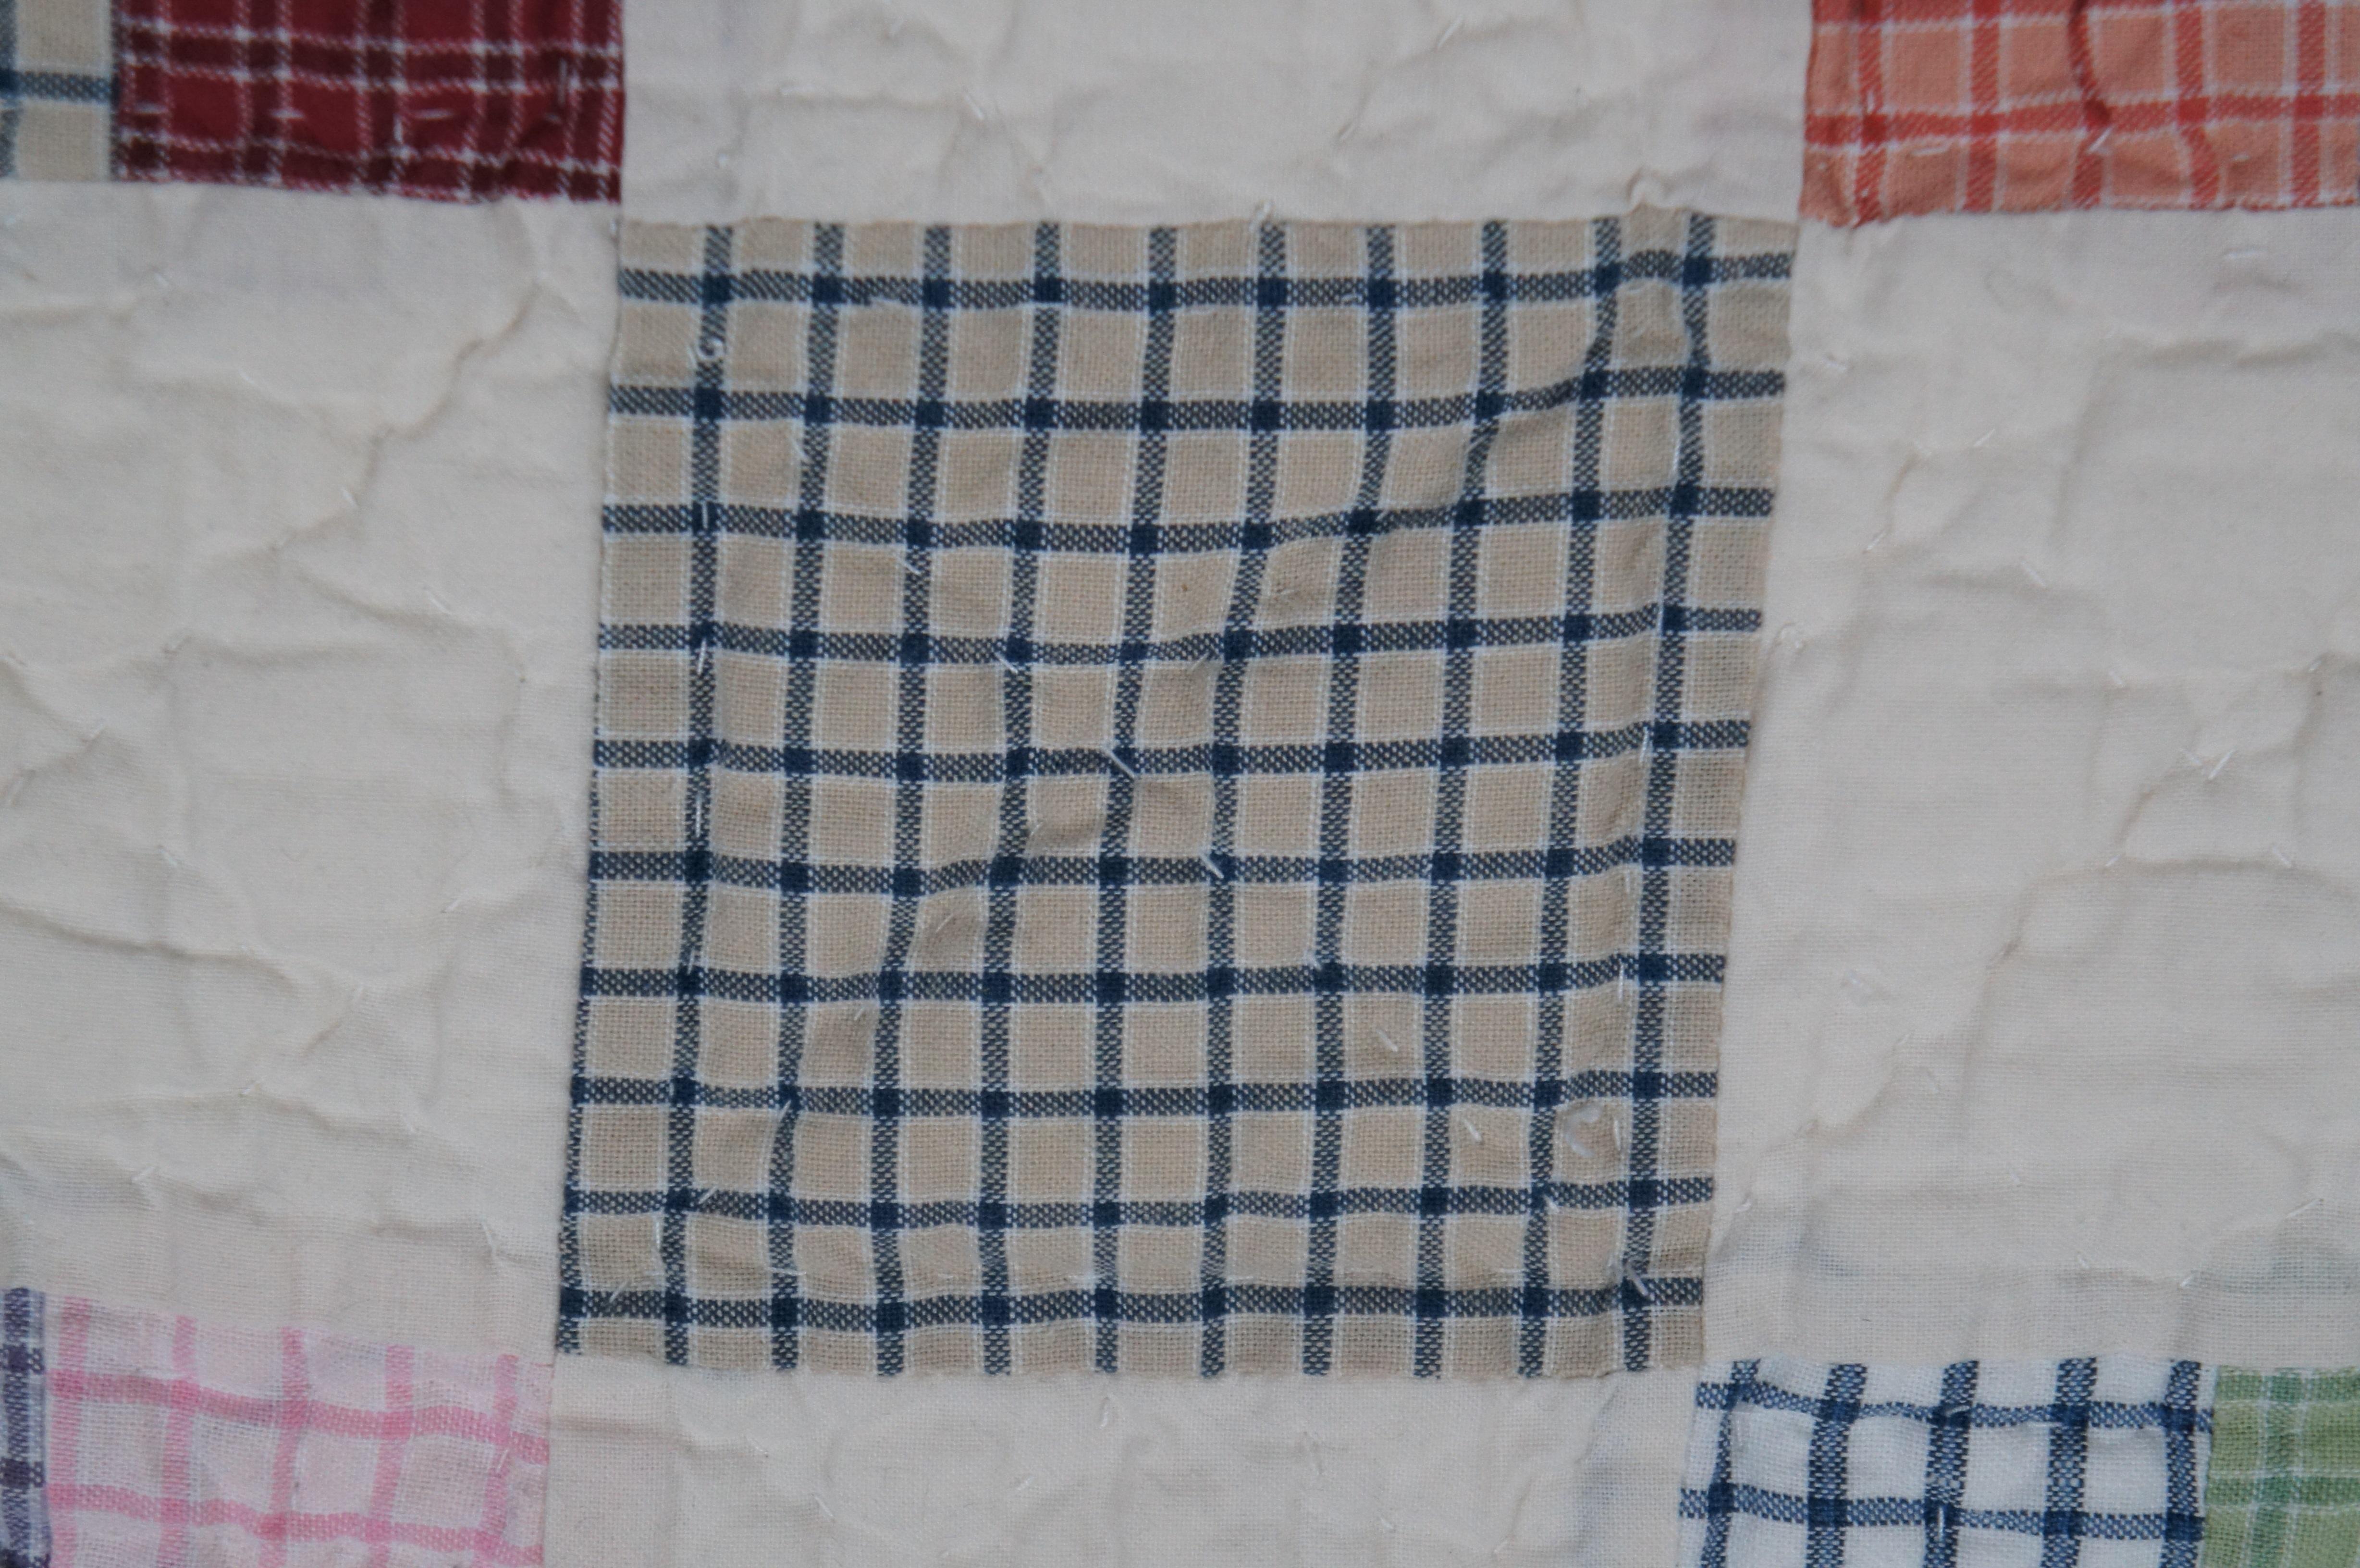 Cotton Antique Folk Art Stitched Geometric Patchwork Quilt Blanket Gingham Check For Sale